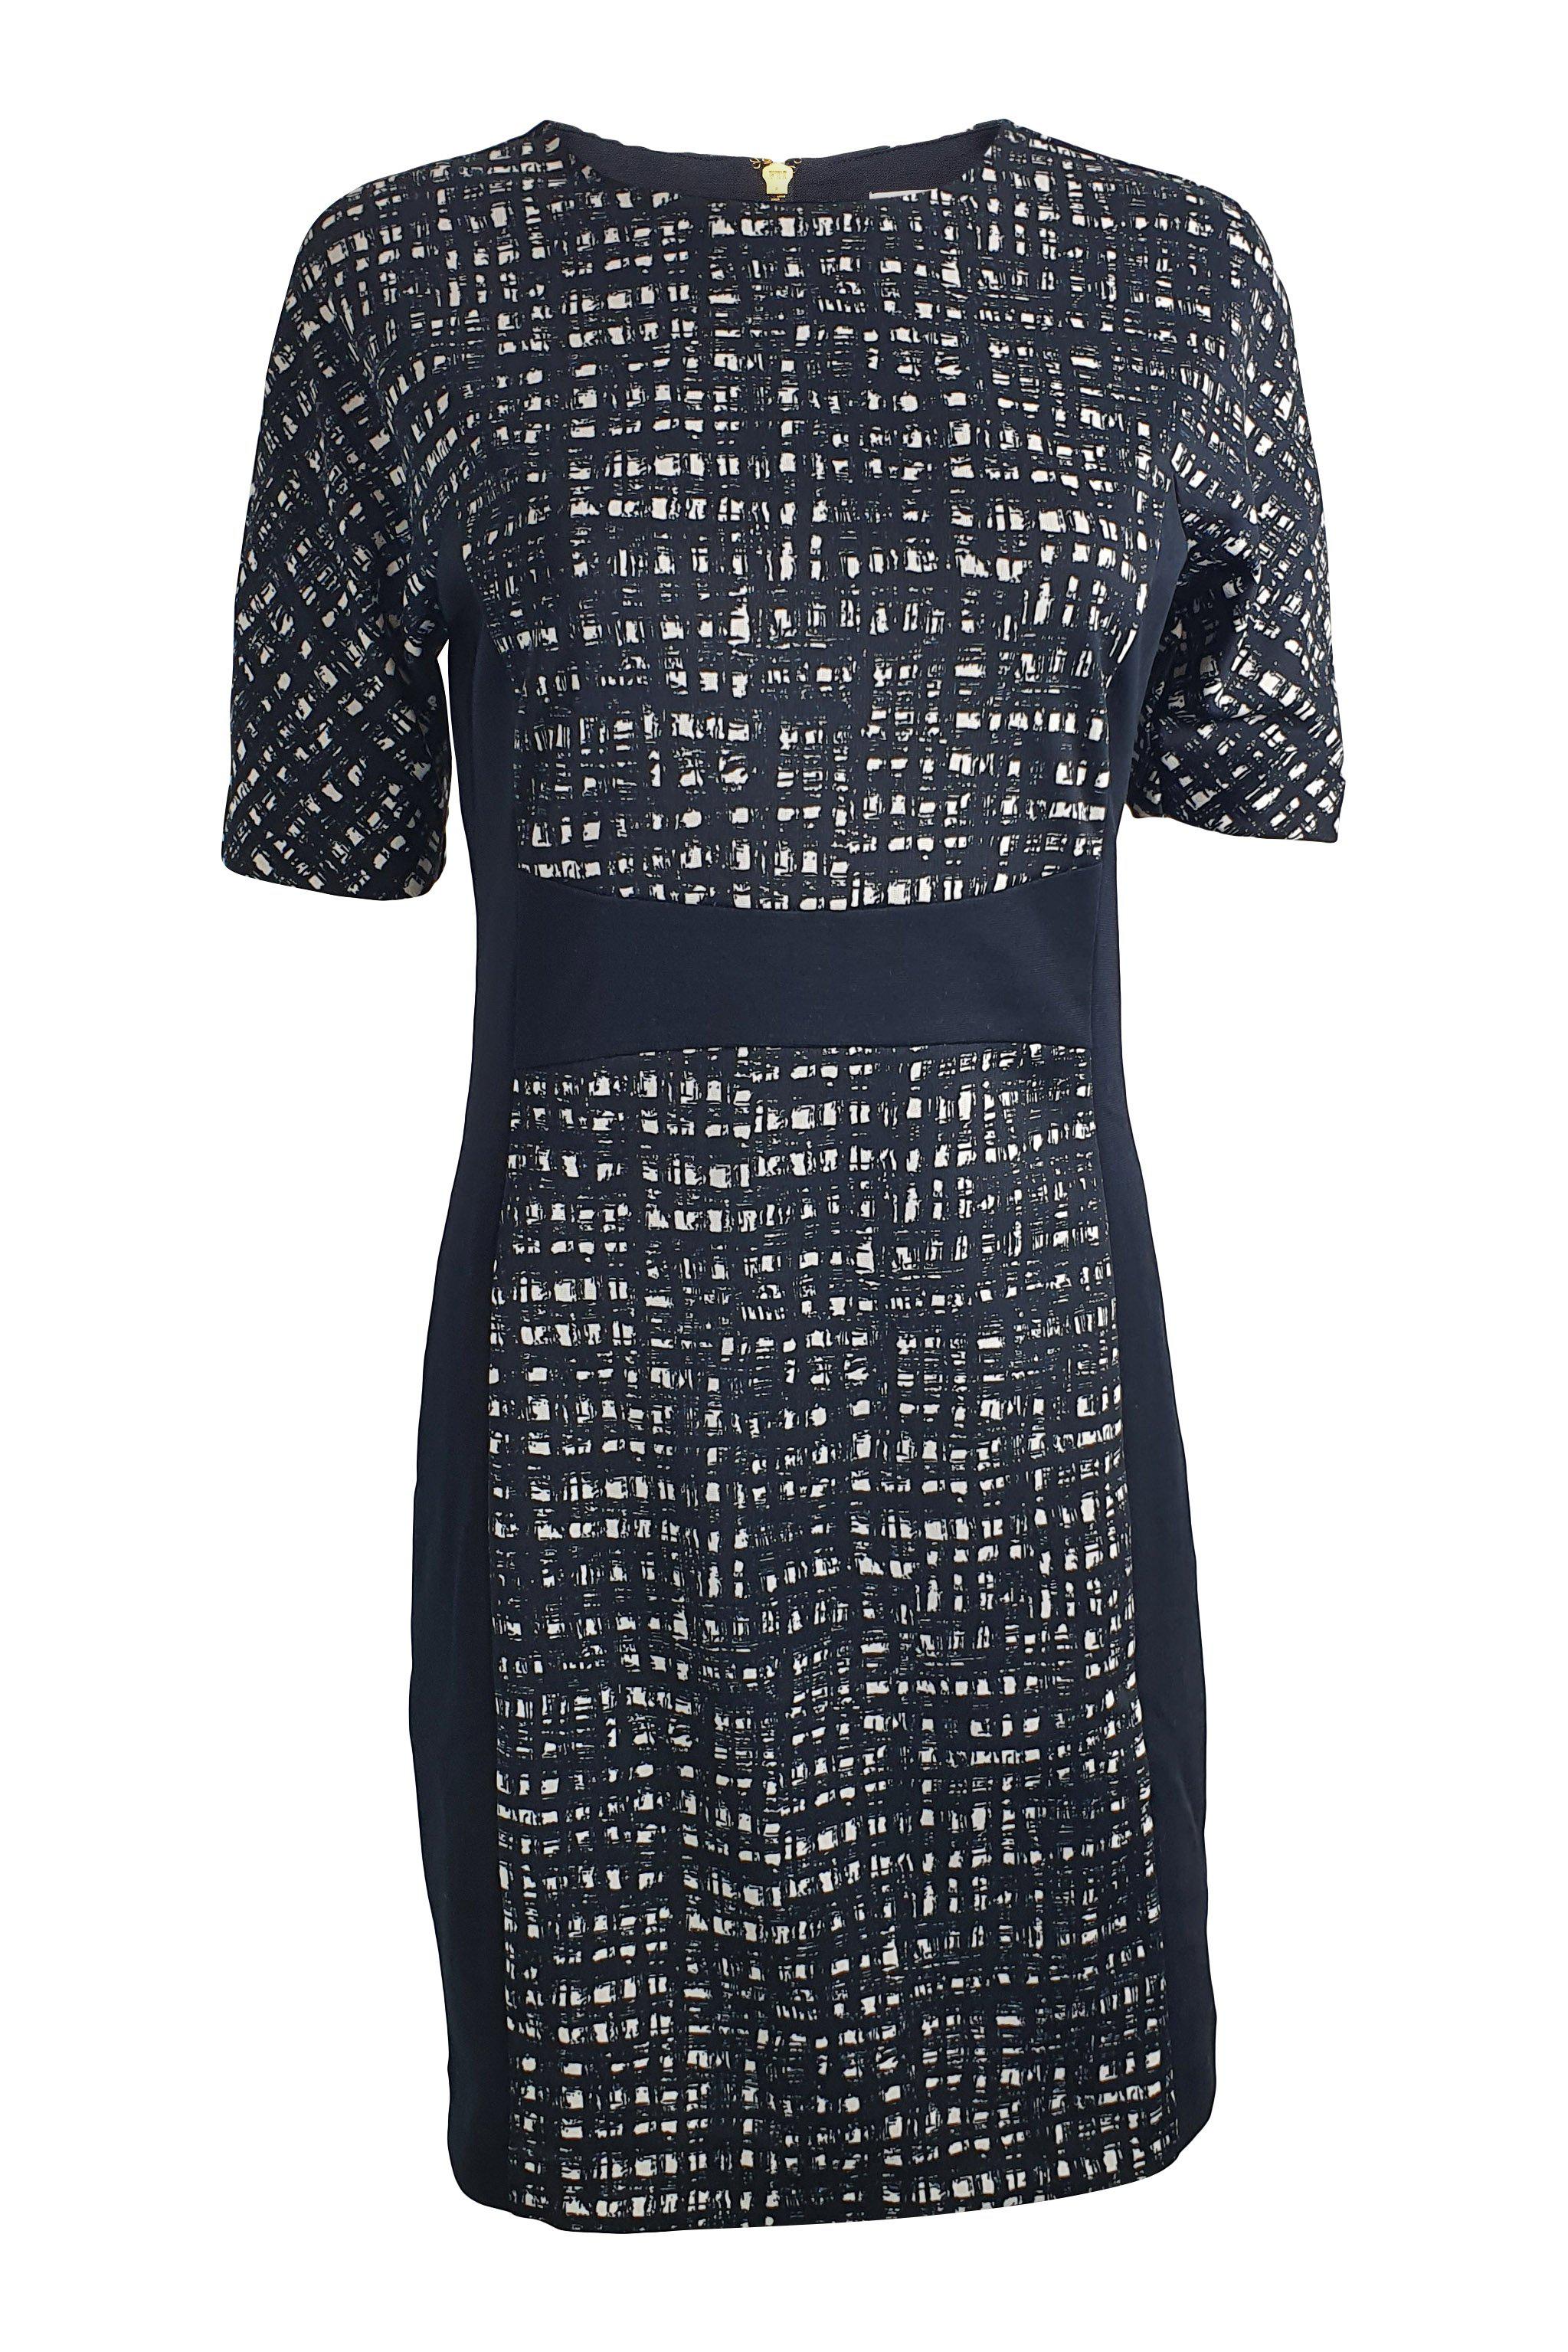 MICHAEL KORS Navy Blue Graphic Print Short Sleeved Shift Dress (US 4) – The  Freperie